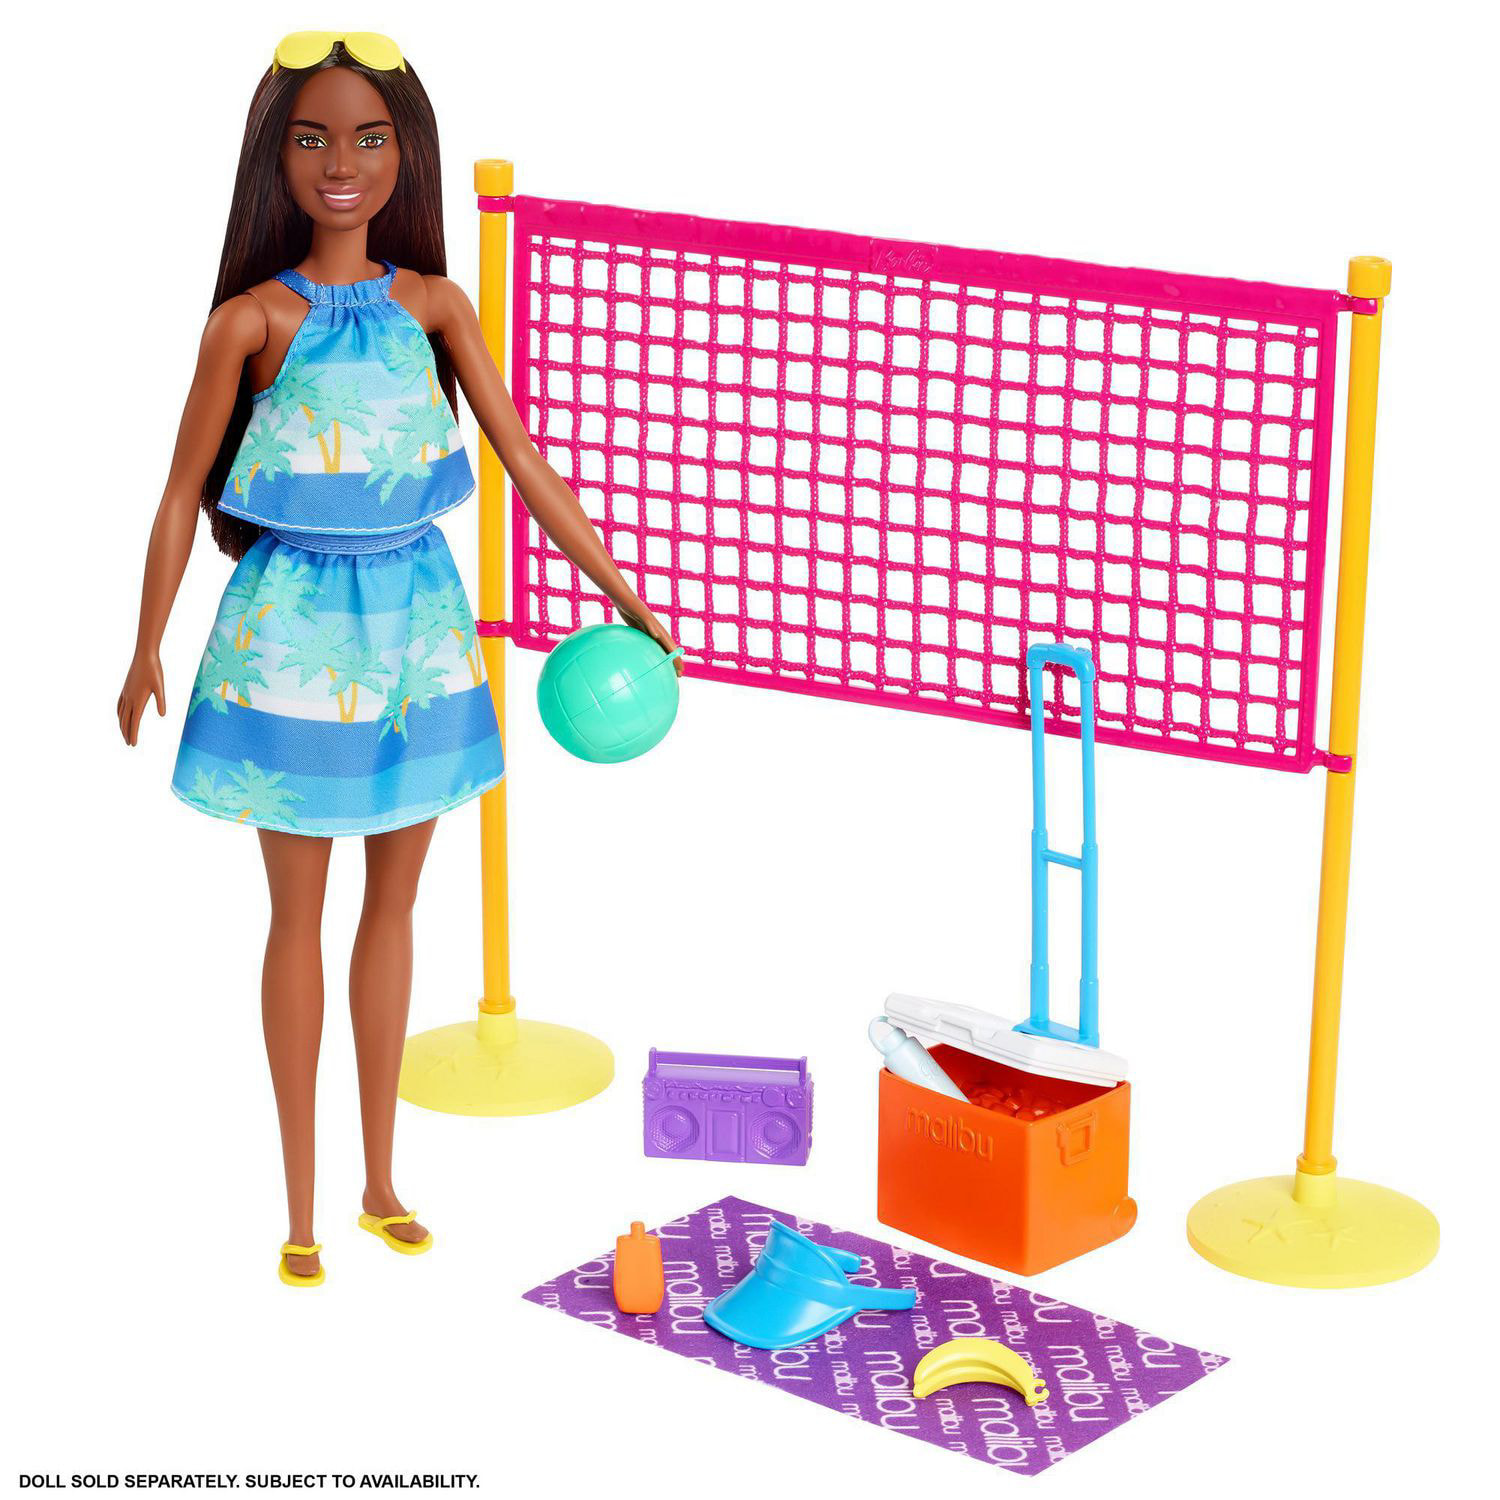 Barbie Loves the Ocean Beach Volleyball Themed Playset - each